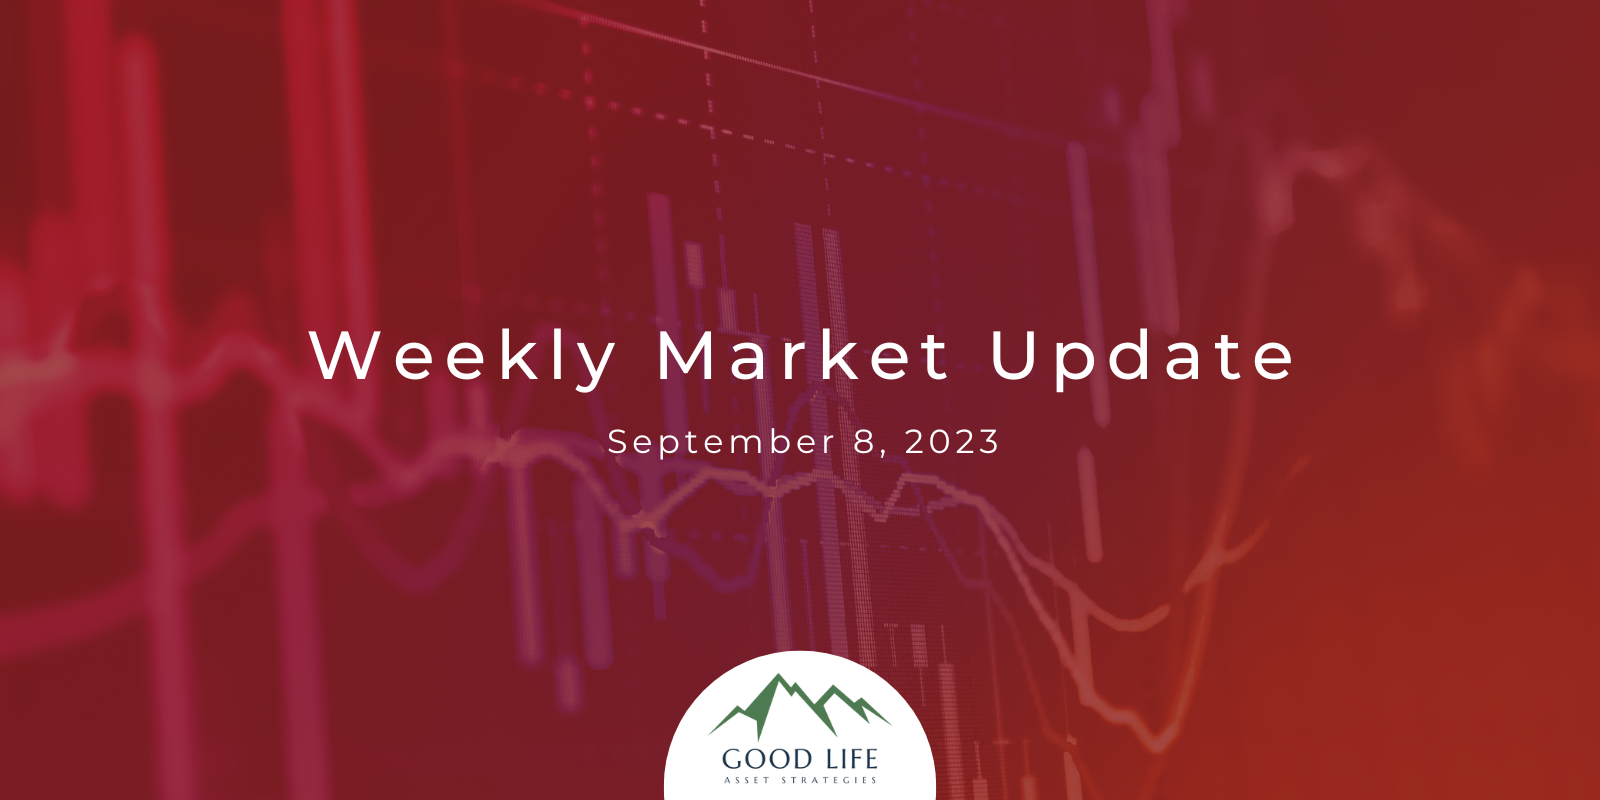 Stock pullback weekly market update image for September 8, 2023.